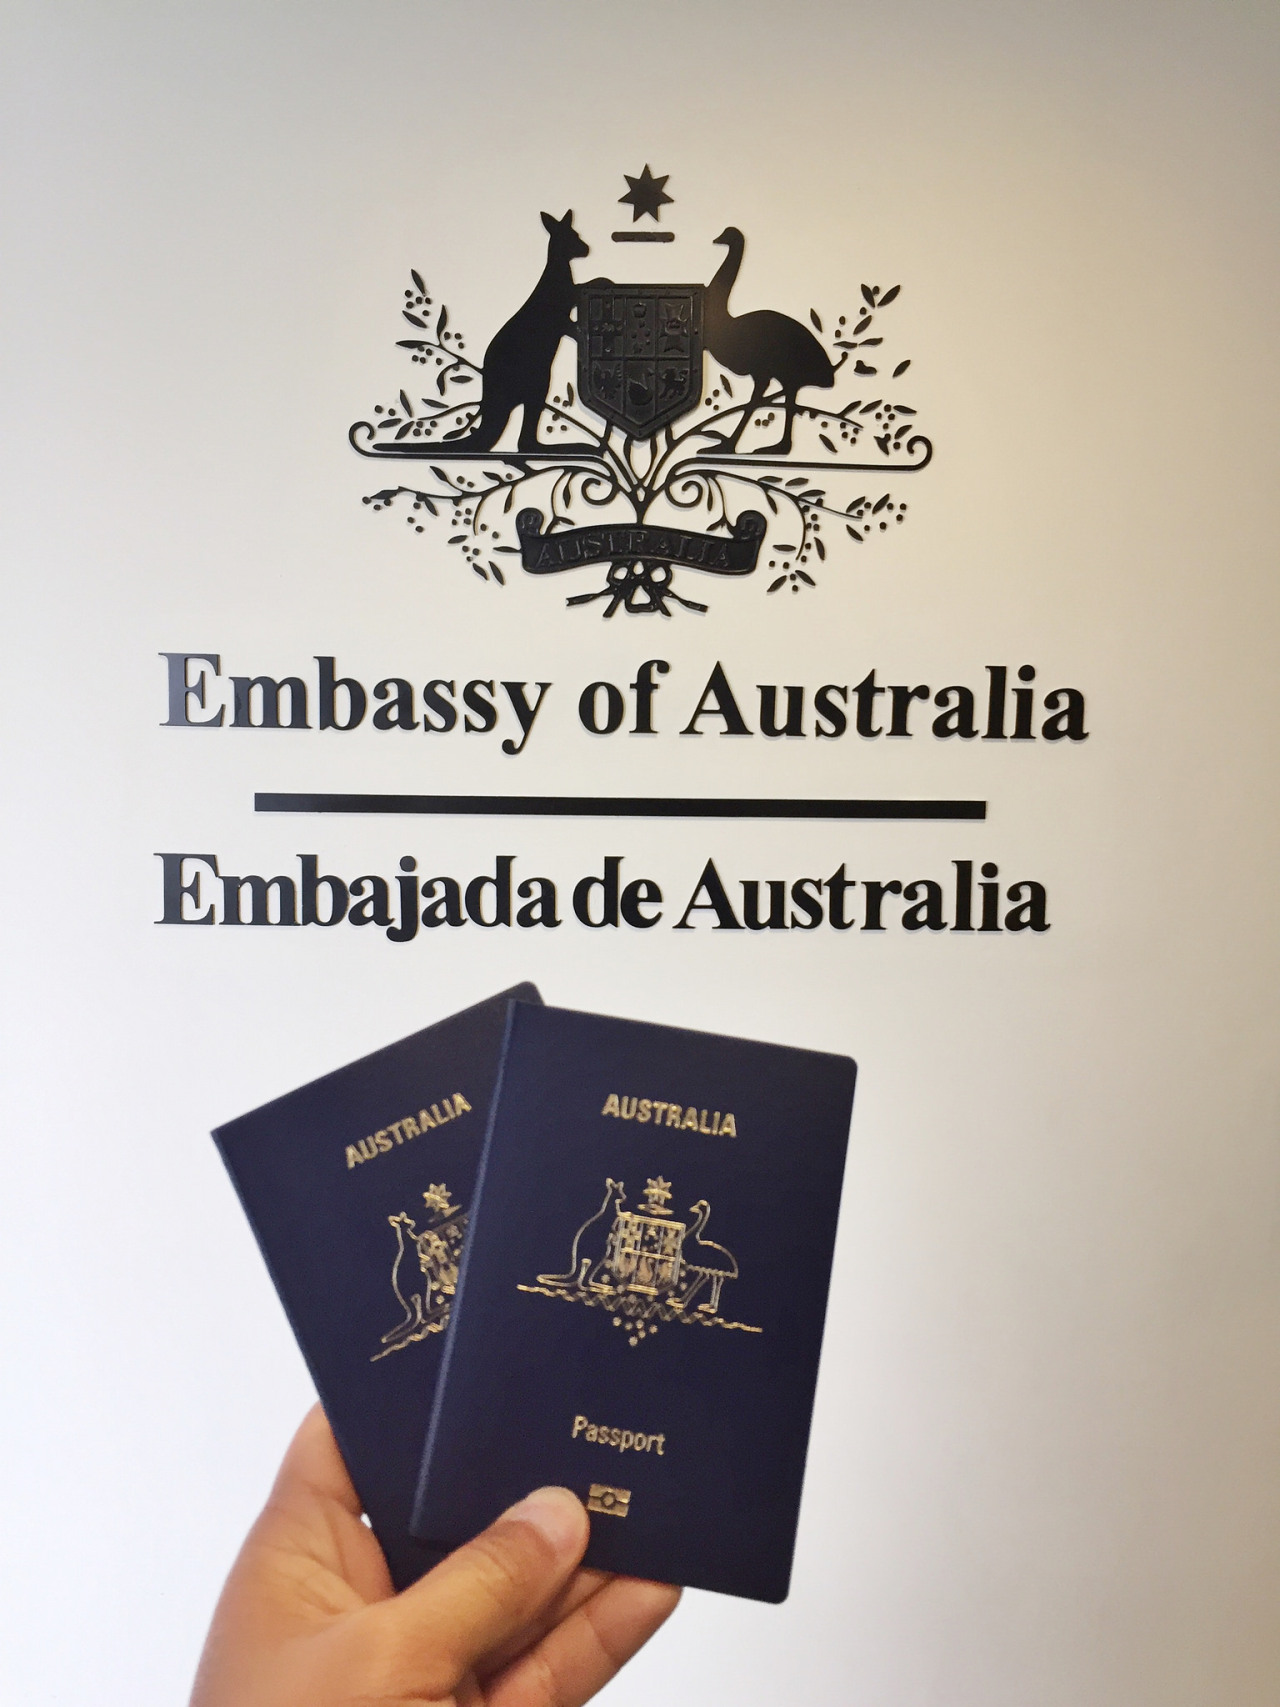 How long does it take to get an australian passport